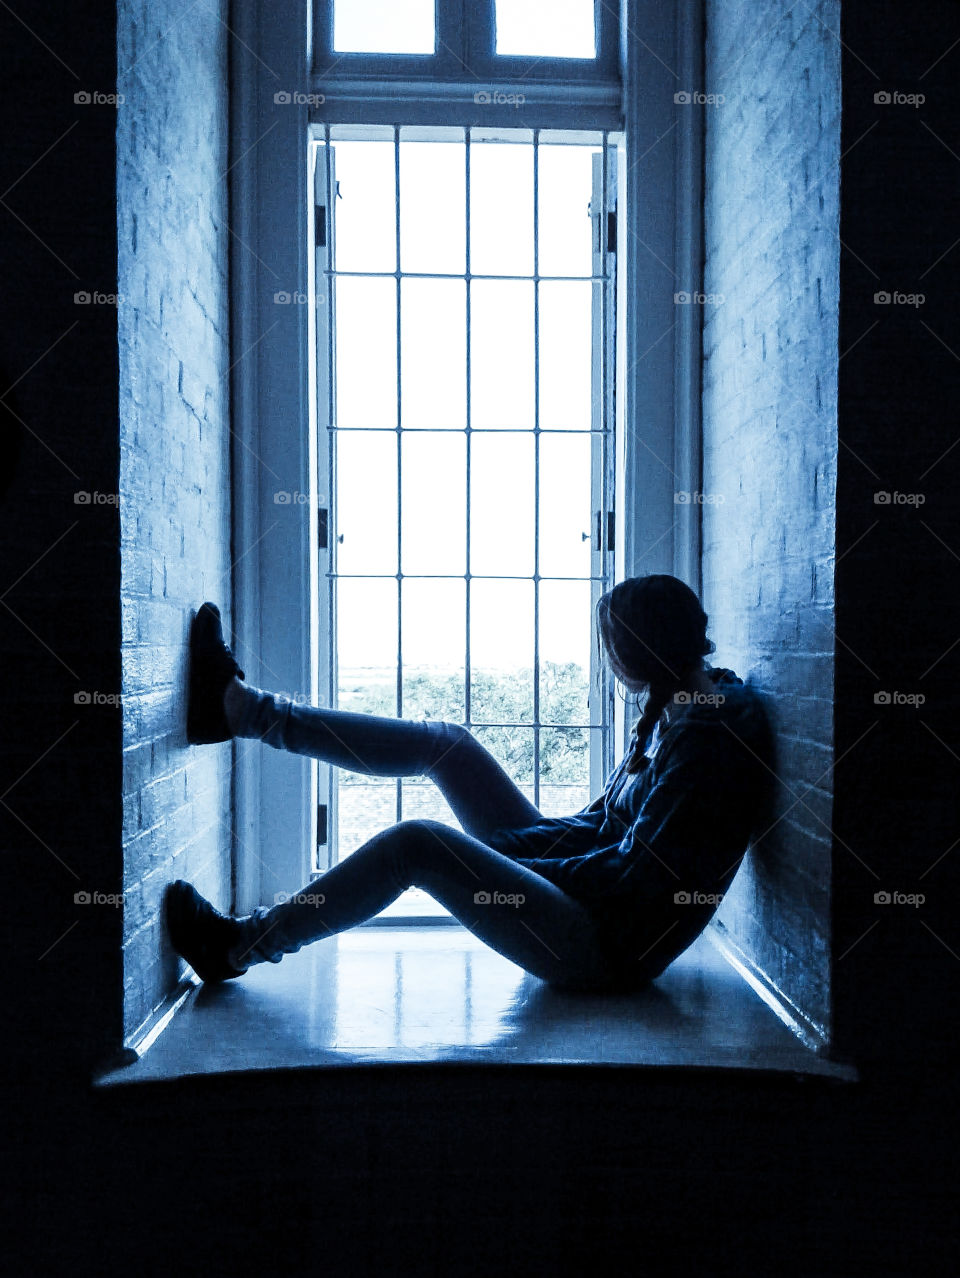 Girl sitting in a window well.